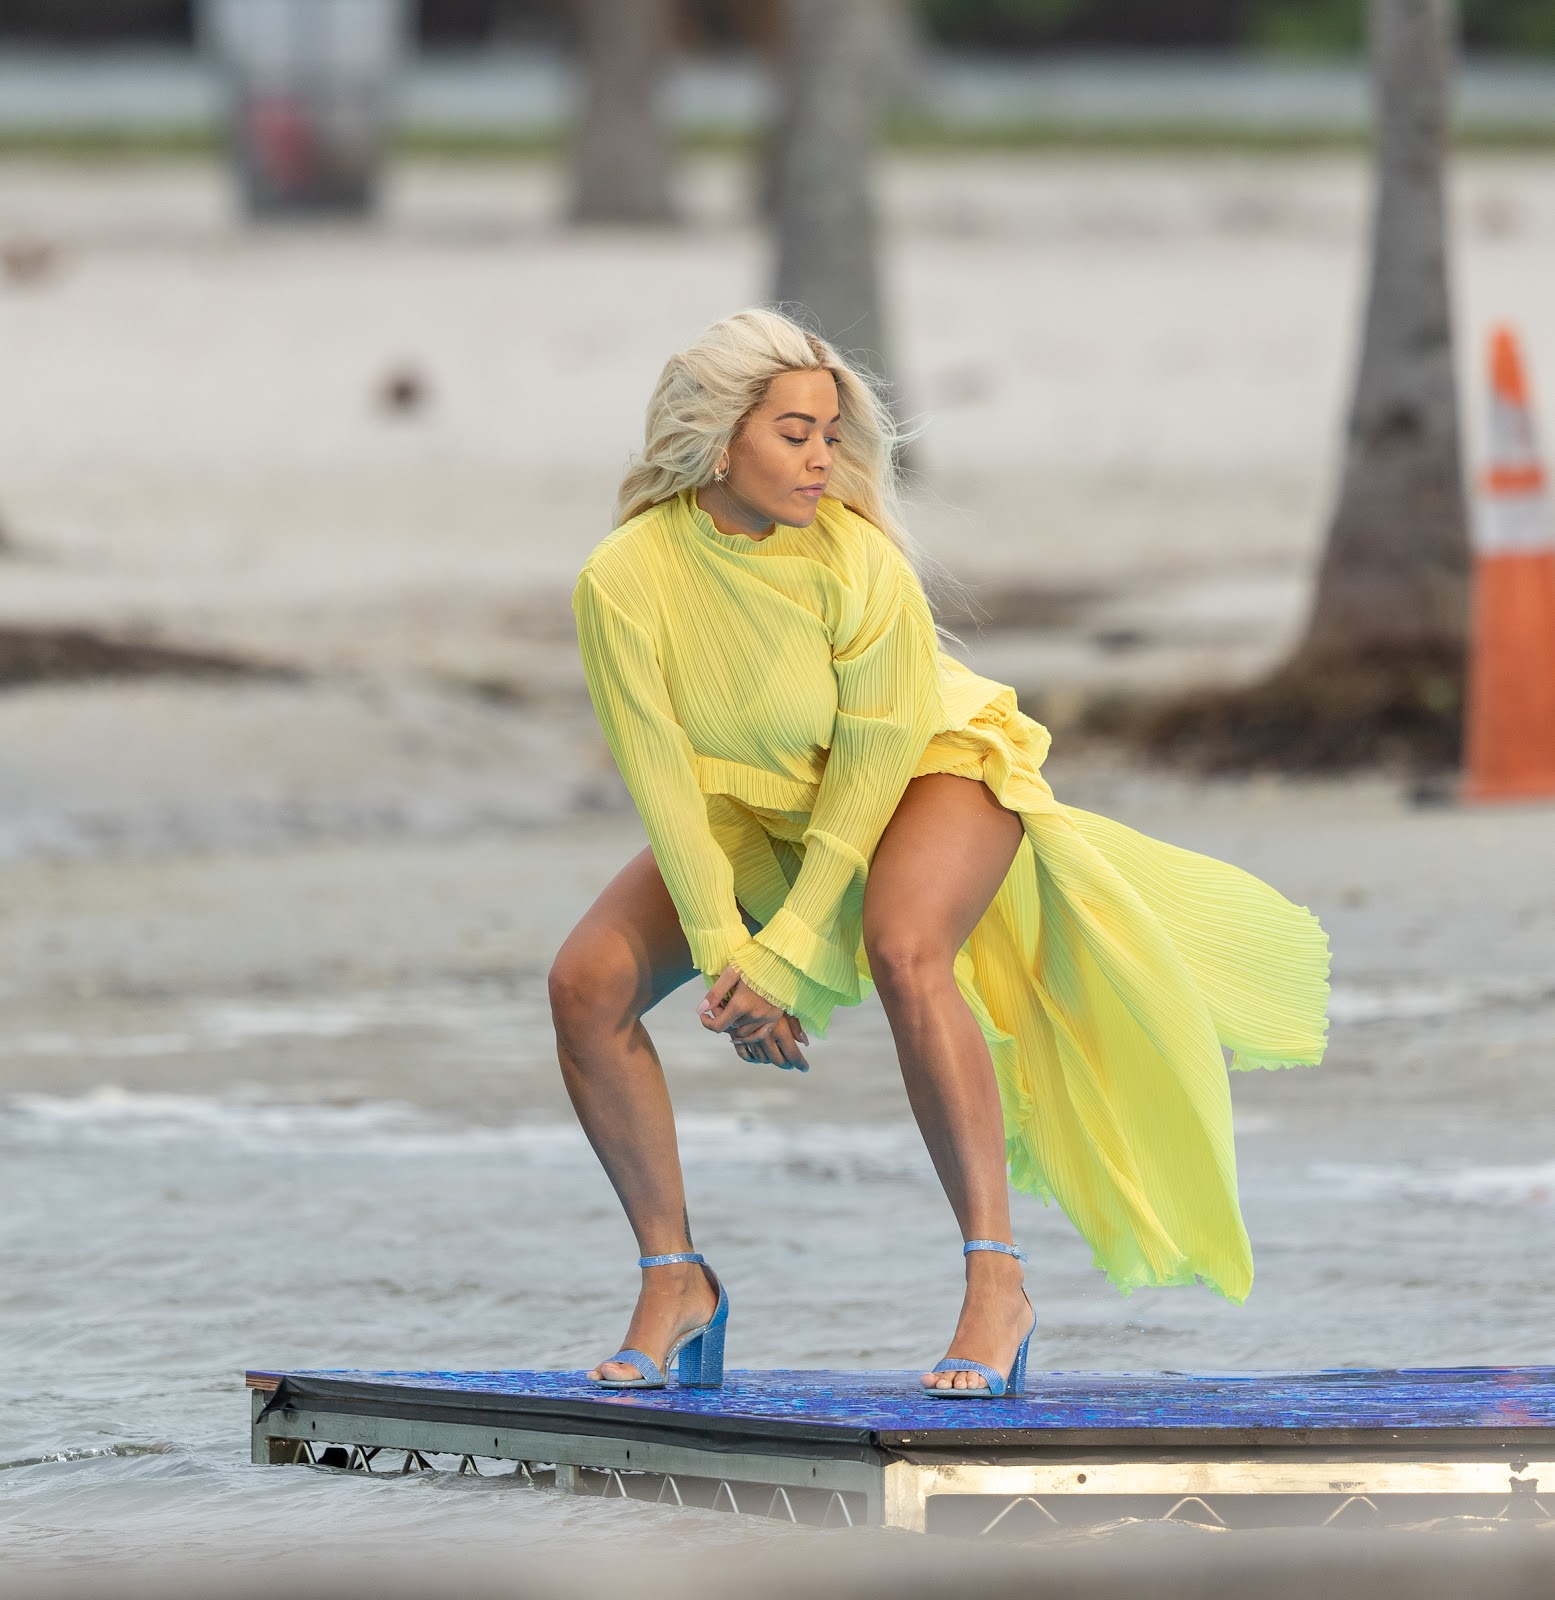 Rita Ora Ass And Cameltoe While Shooting A Music Video In Miami.